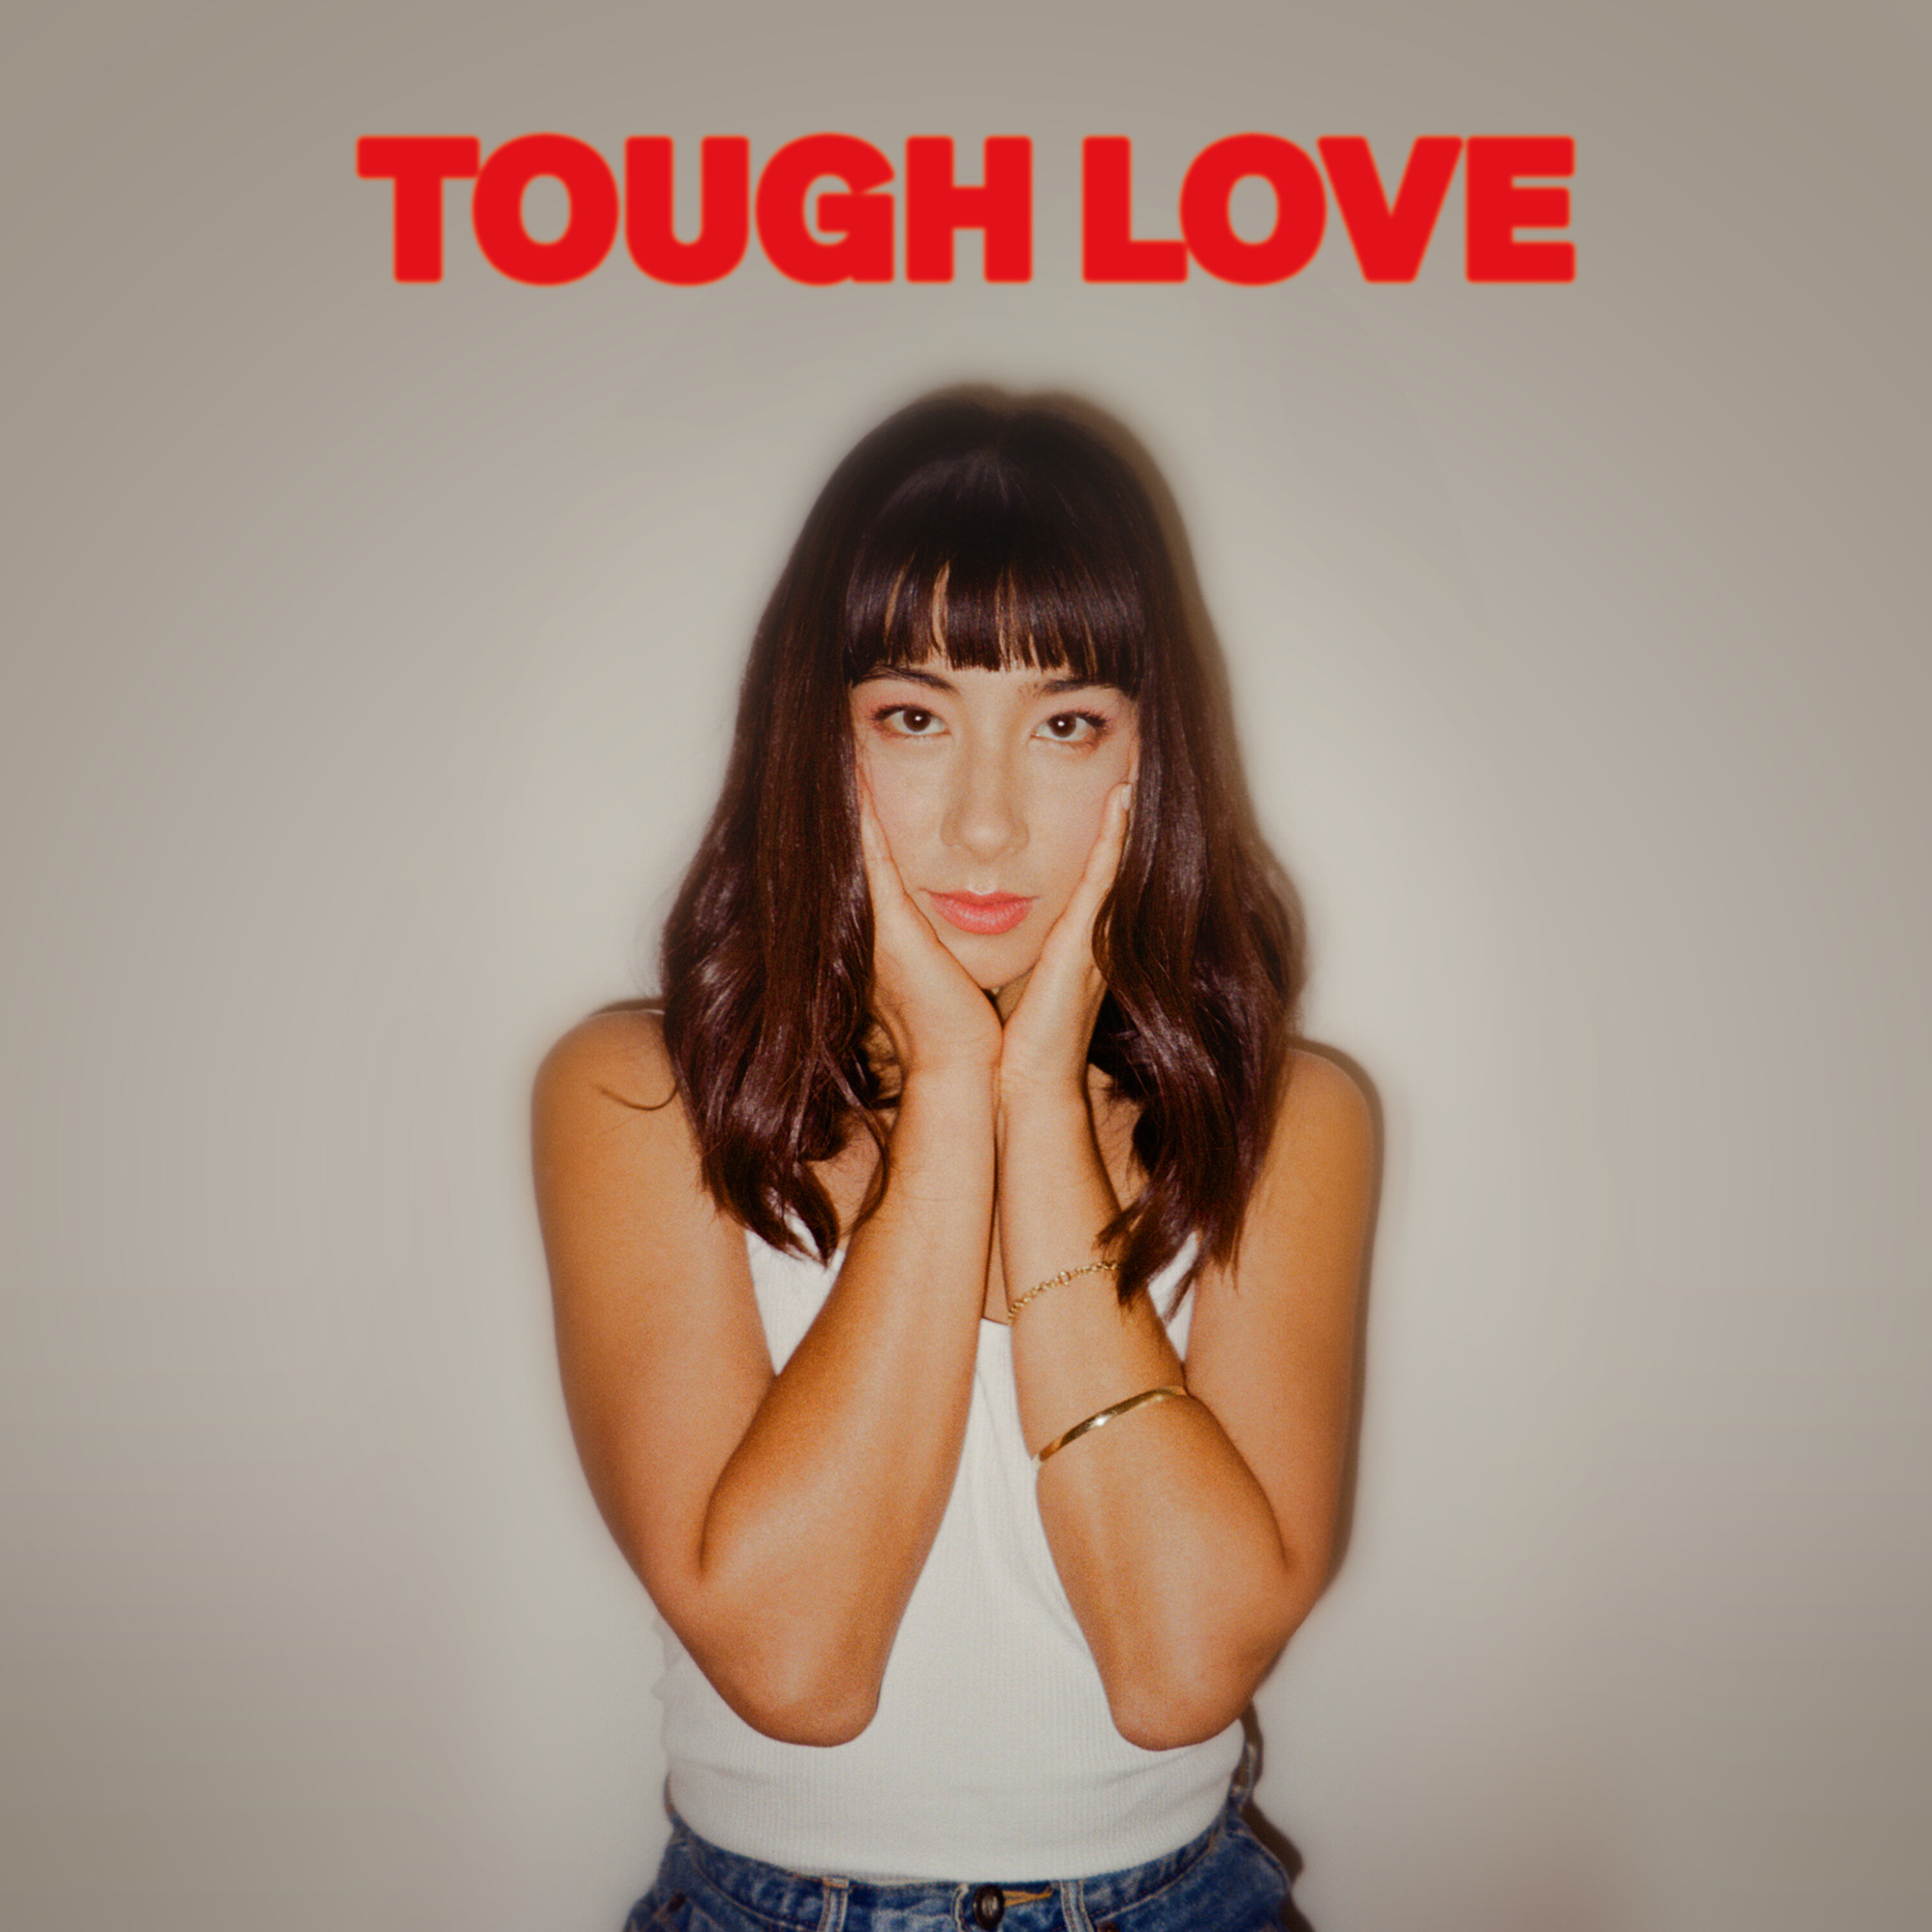 Coming Soon - Linda Marigliano’s Tough Love S2